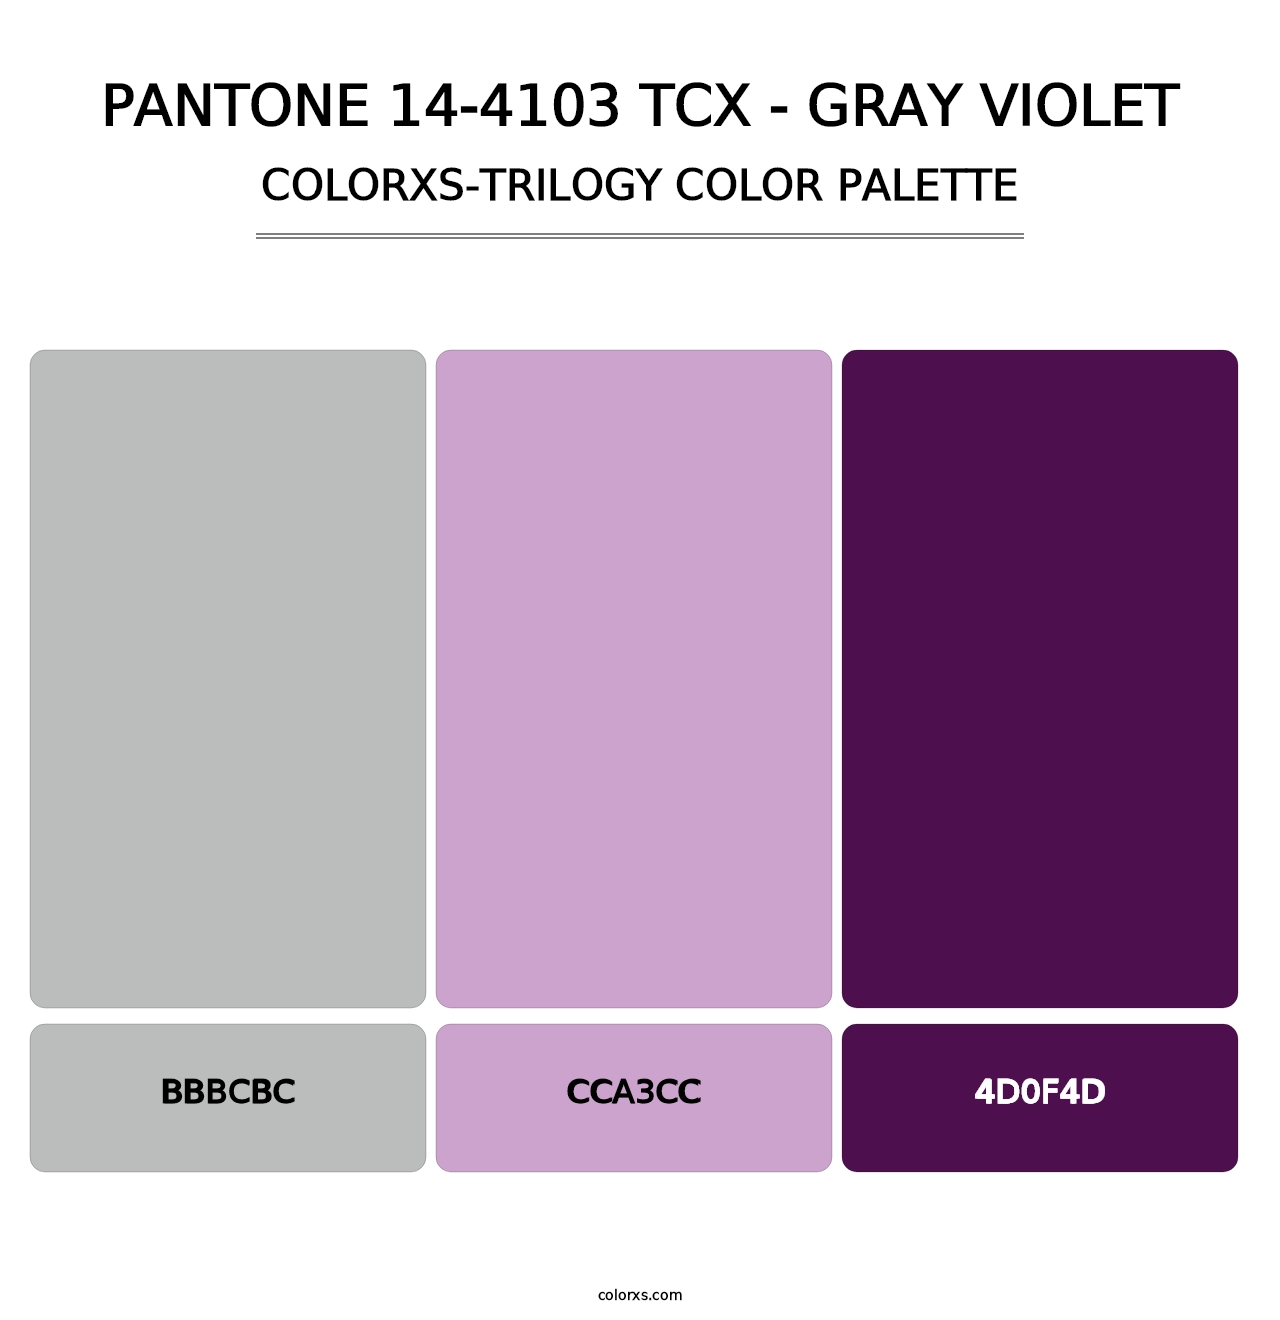 PANTONE 14-4103 TCX - Gray Violet - Colorxs Trilogy Palette